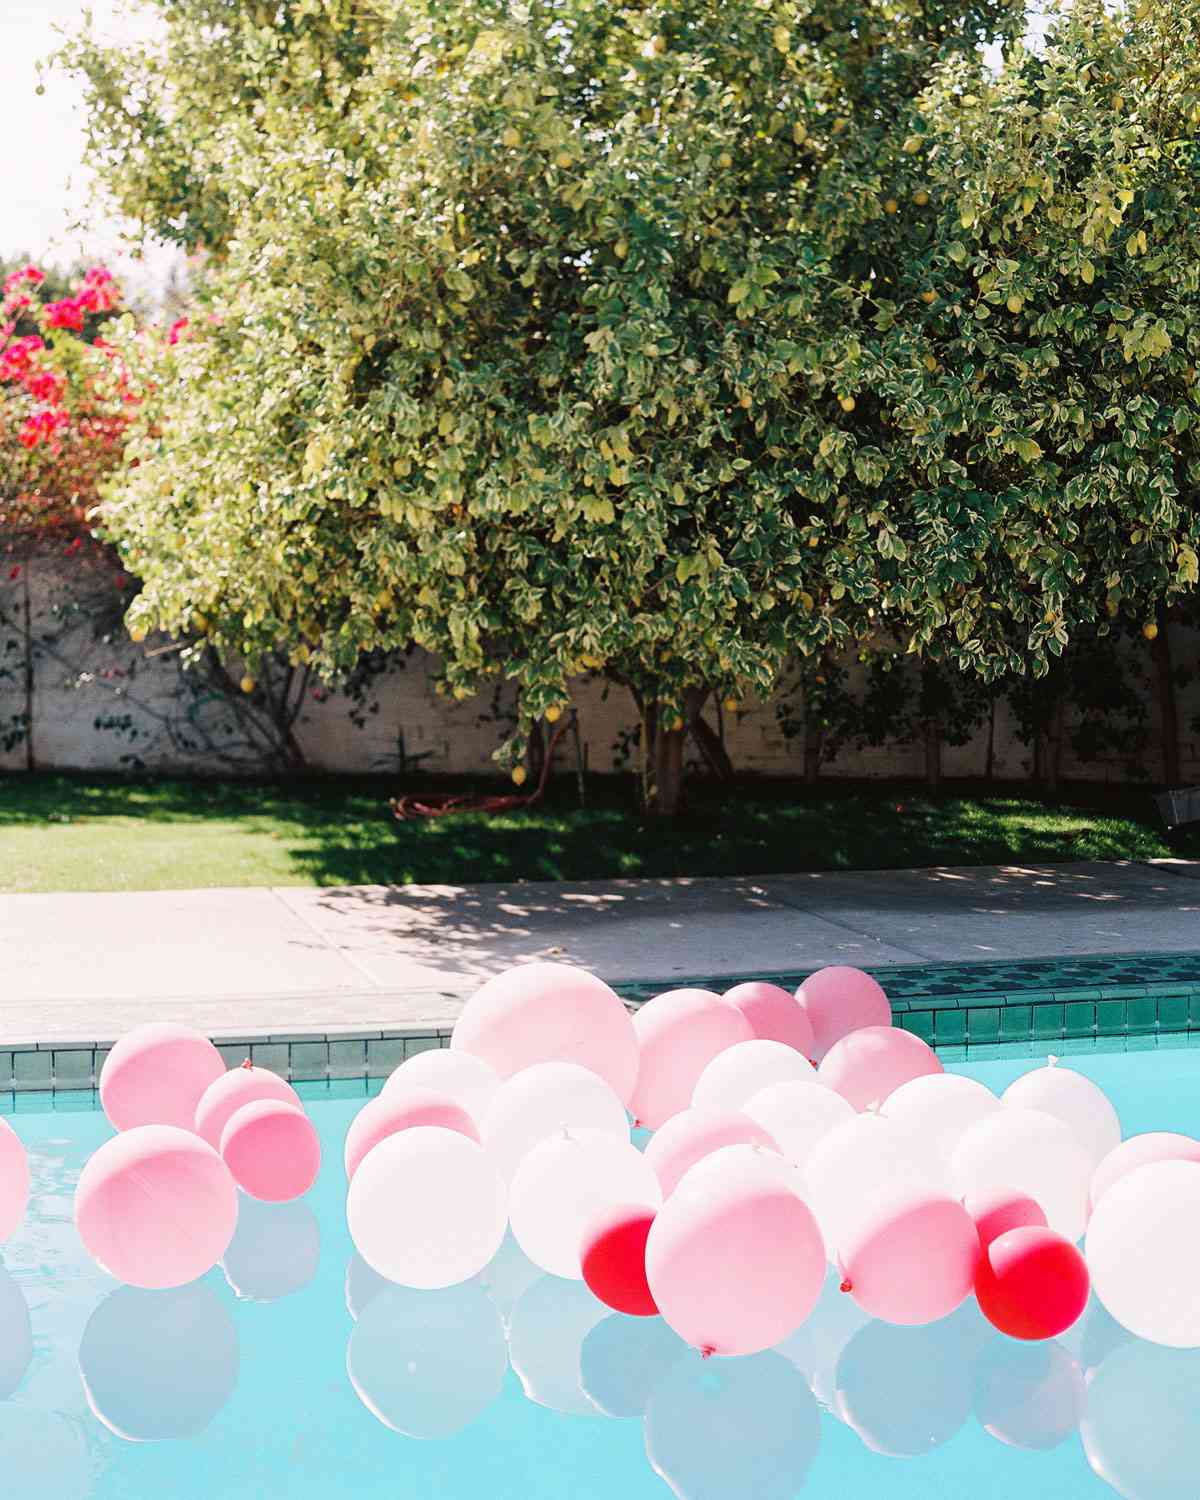 kelly-jeff-wedding-palm-springs-balloons-pool-0125-s112234.jpg